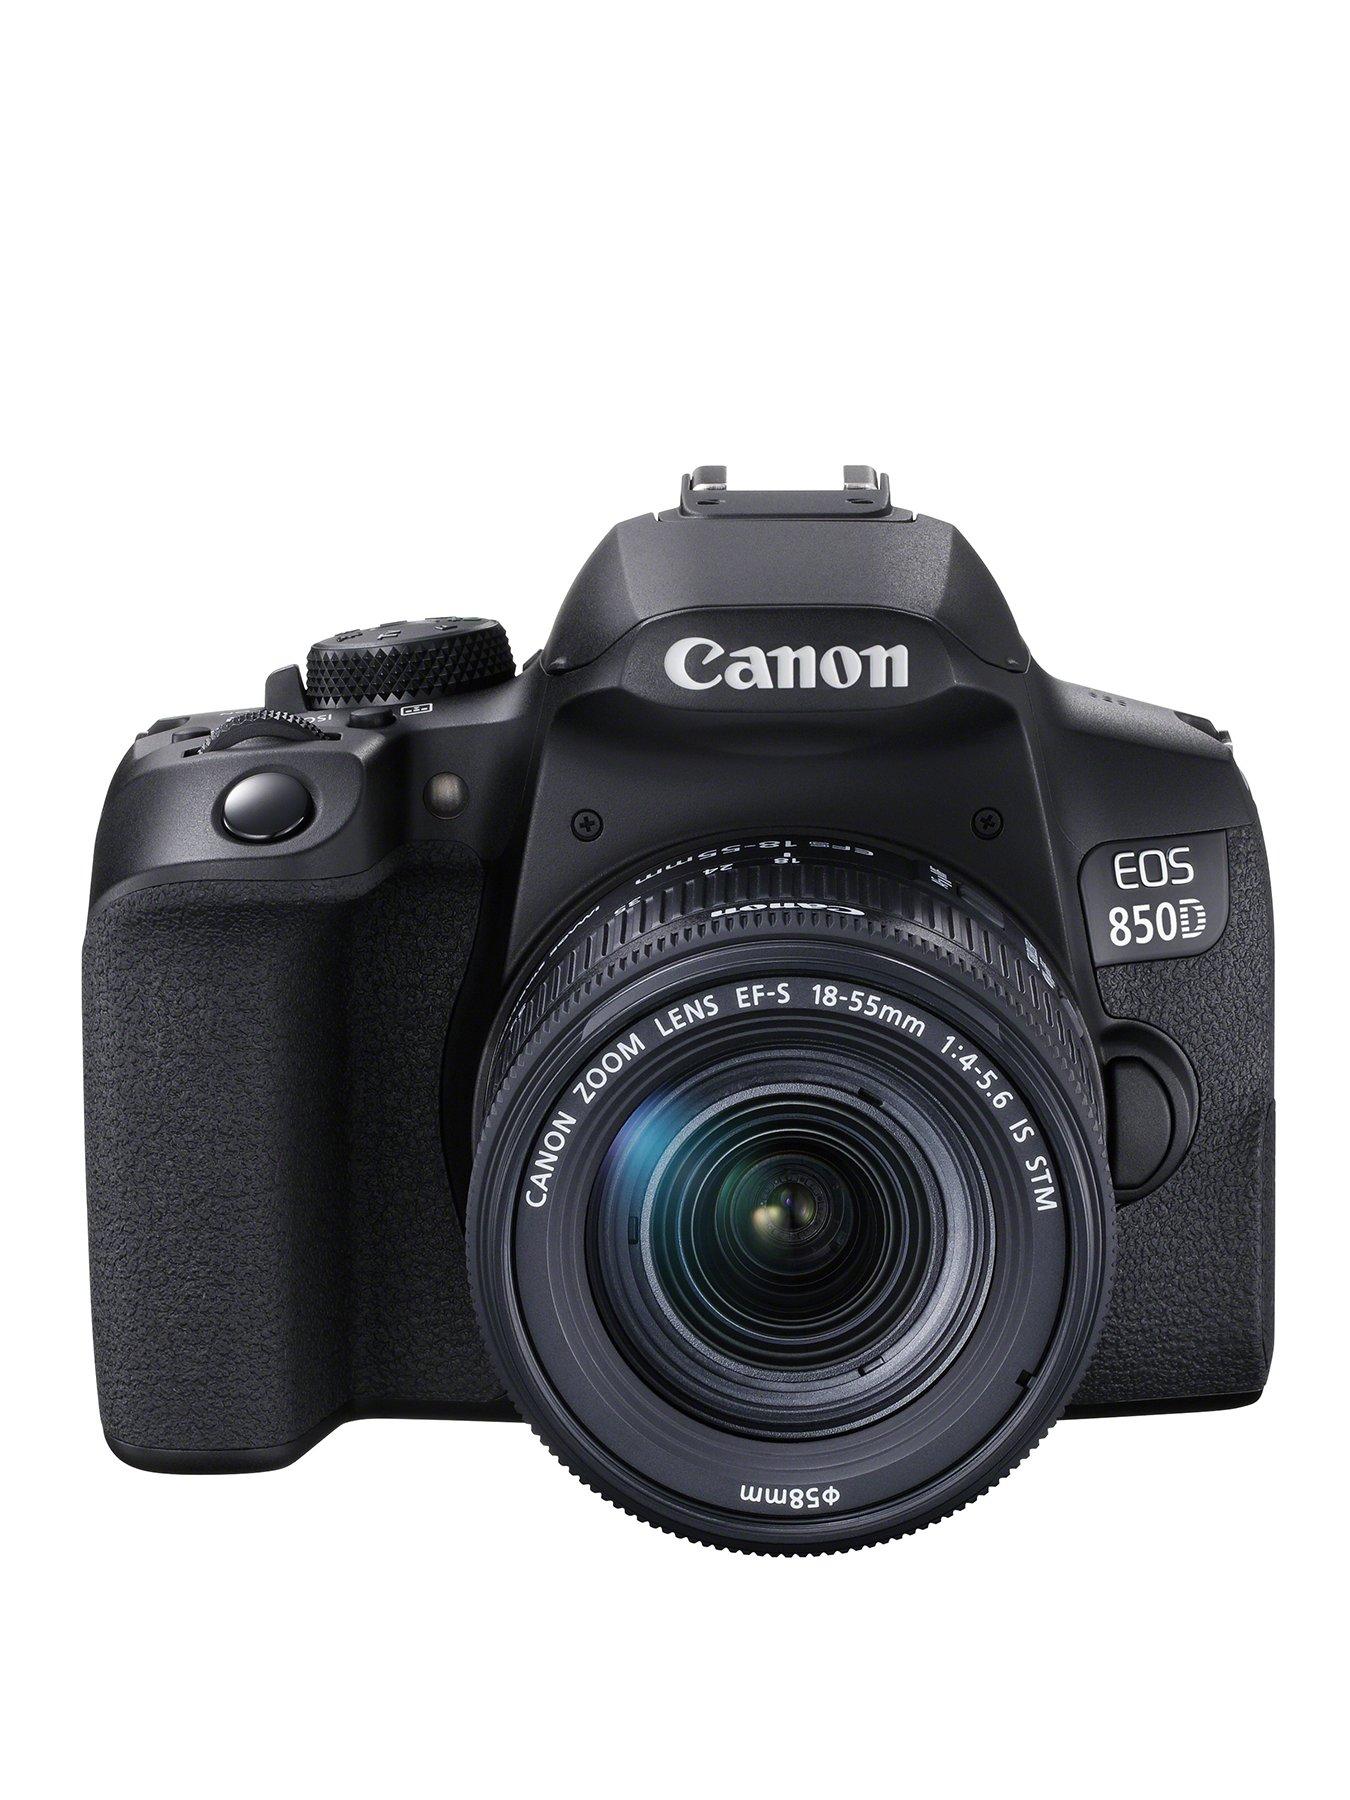 Canon EOS 850D SLR Camera (Black) with EF-S 18-55mm f/4-5.6 IS STM Lens Kit 